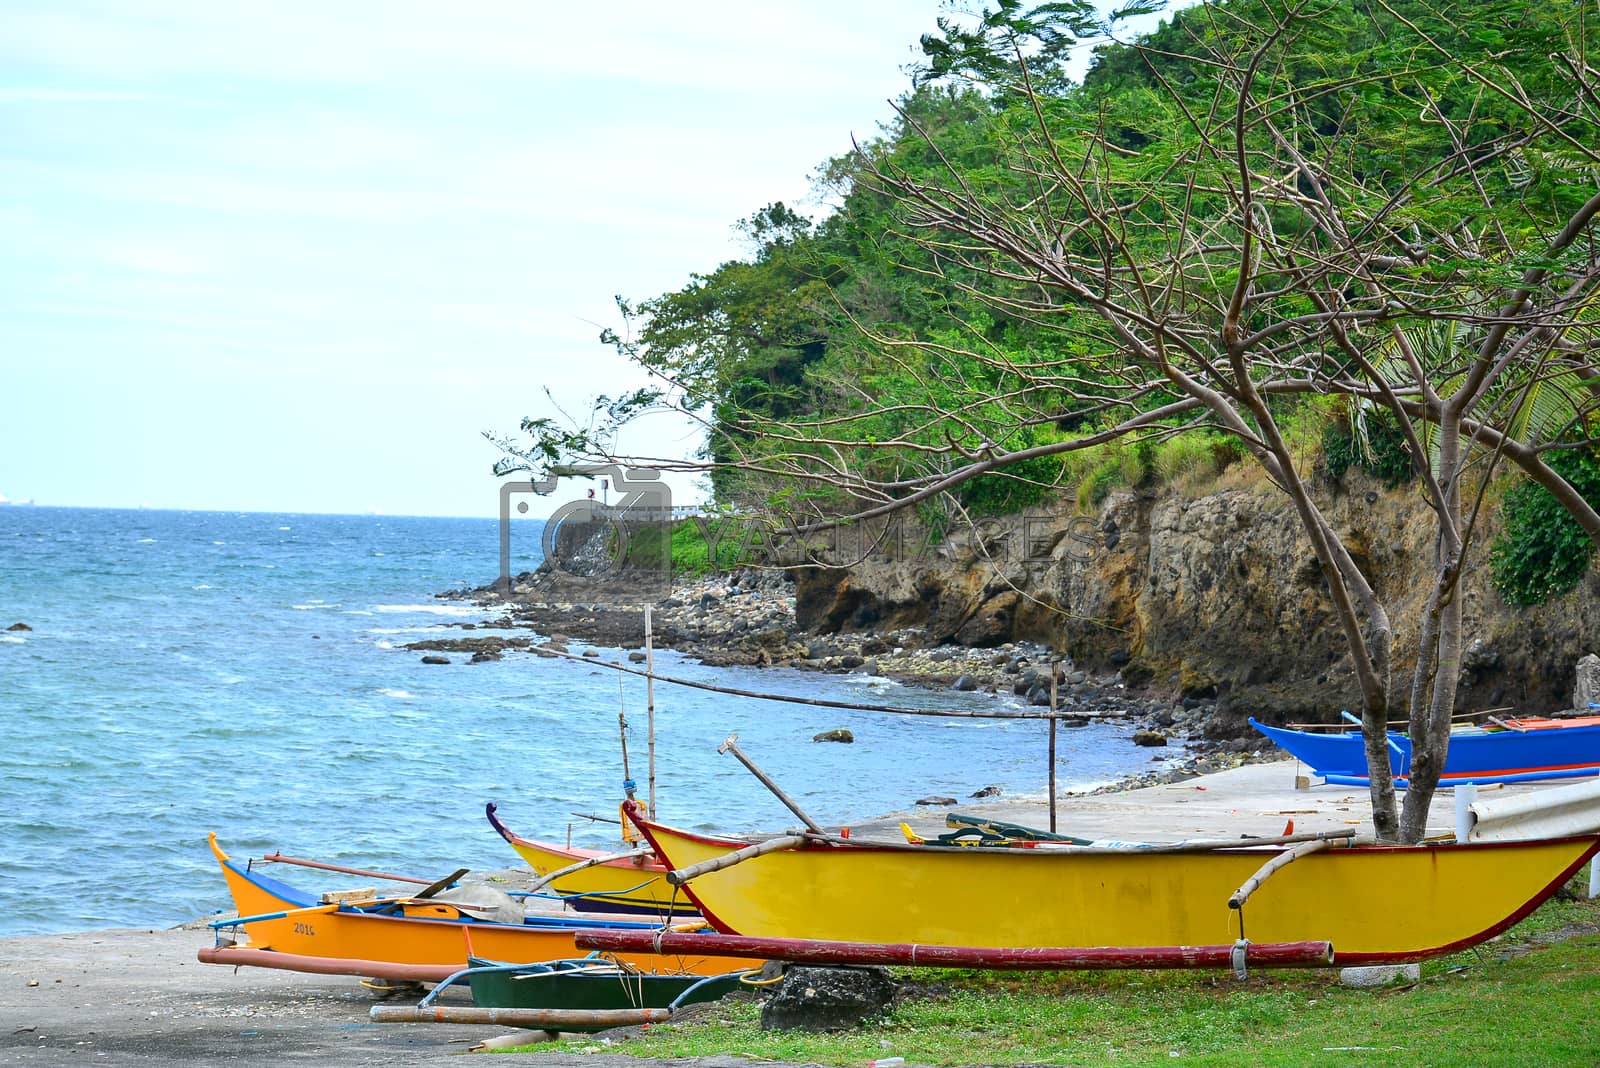 Royalty free image of Corregidor island boat dock in Cavite, Philippines by imwaltersy